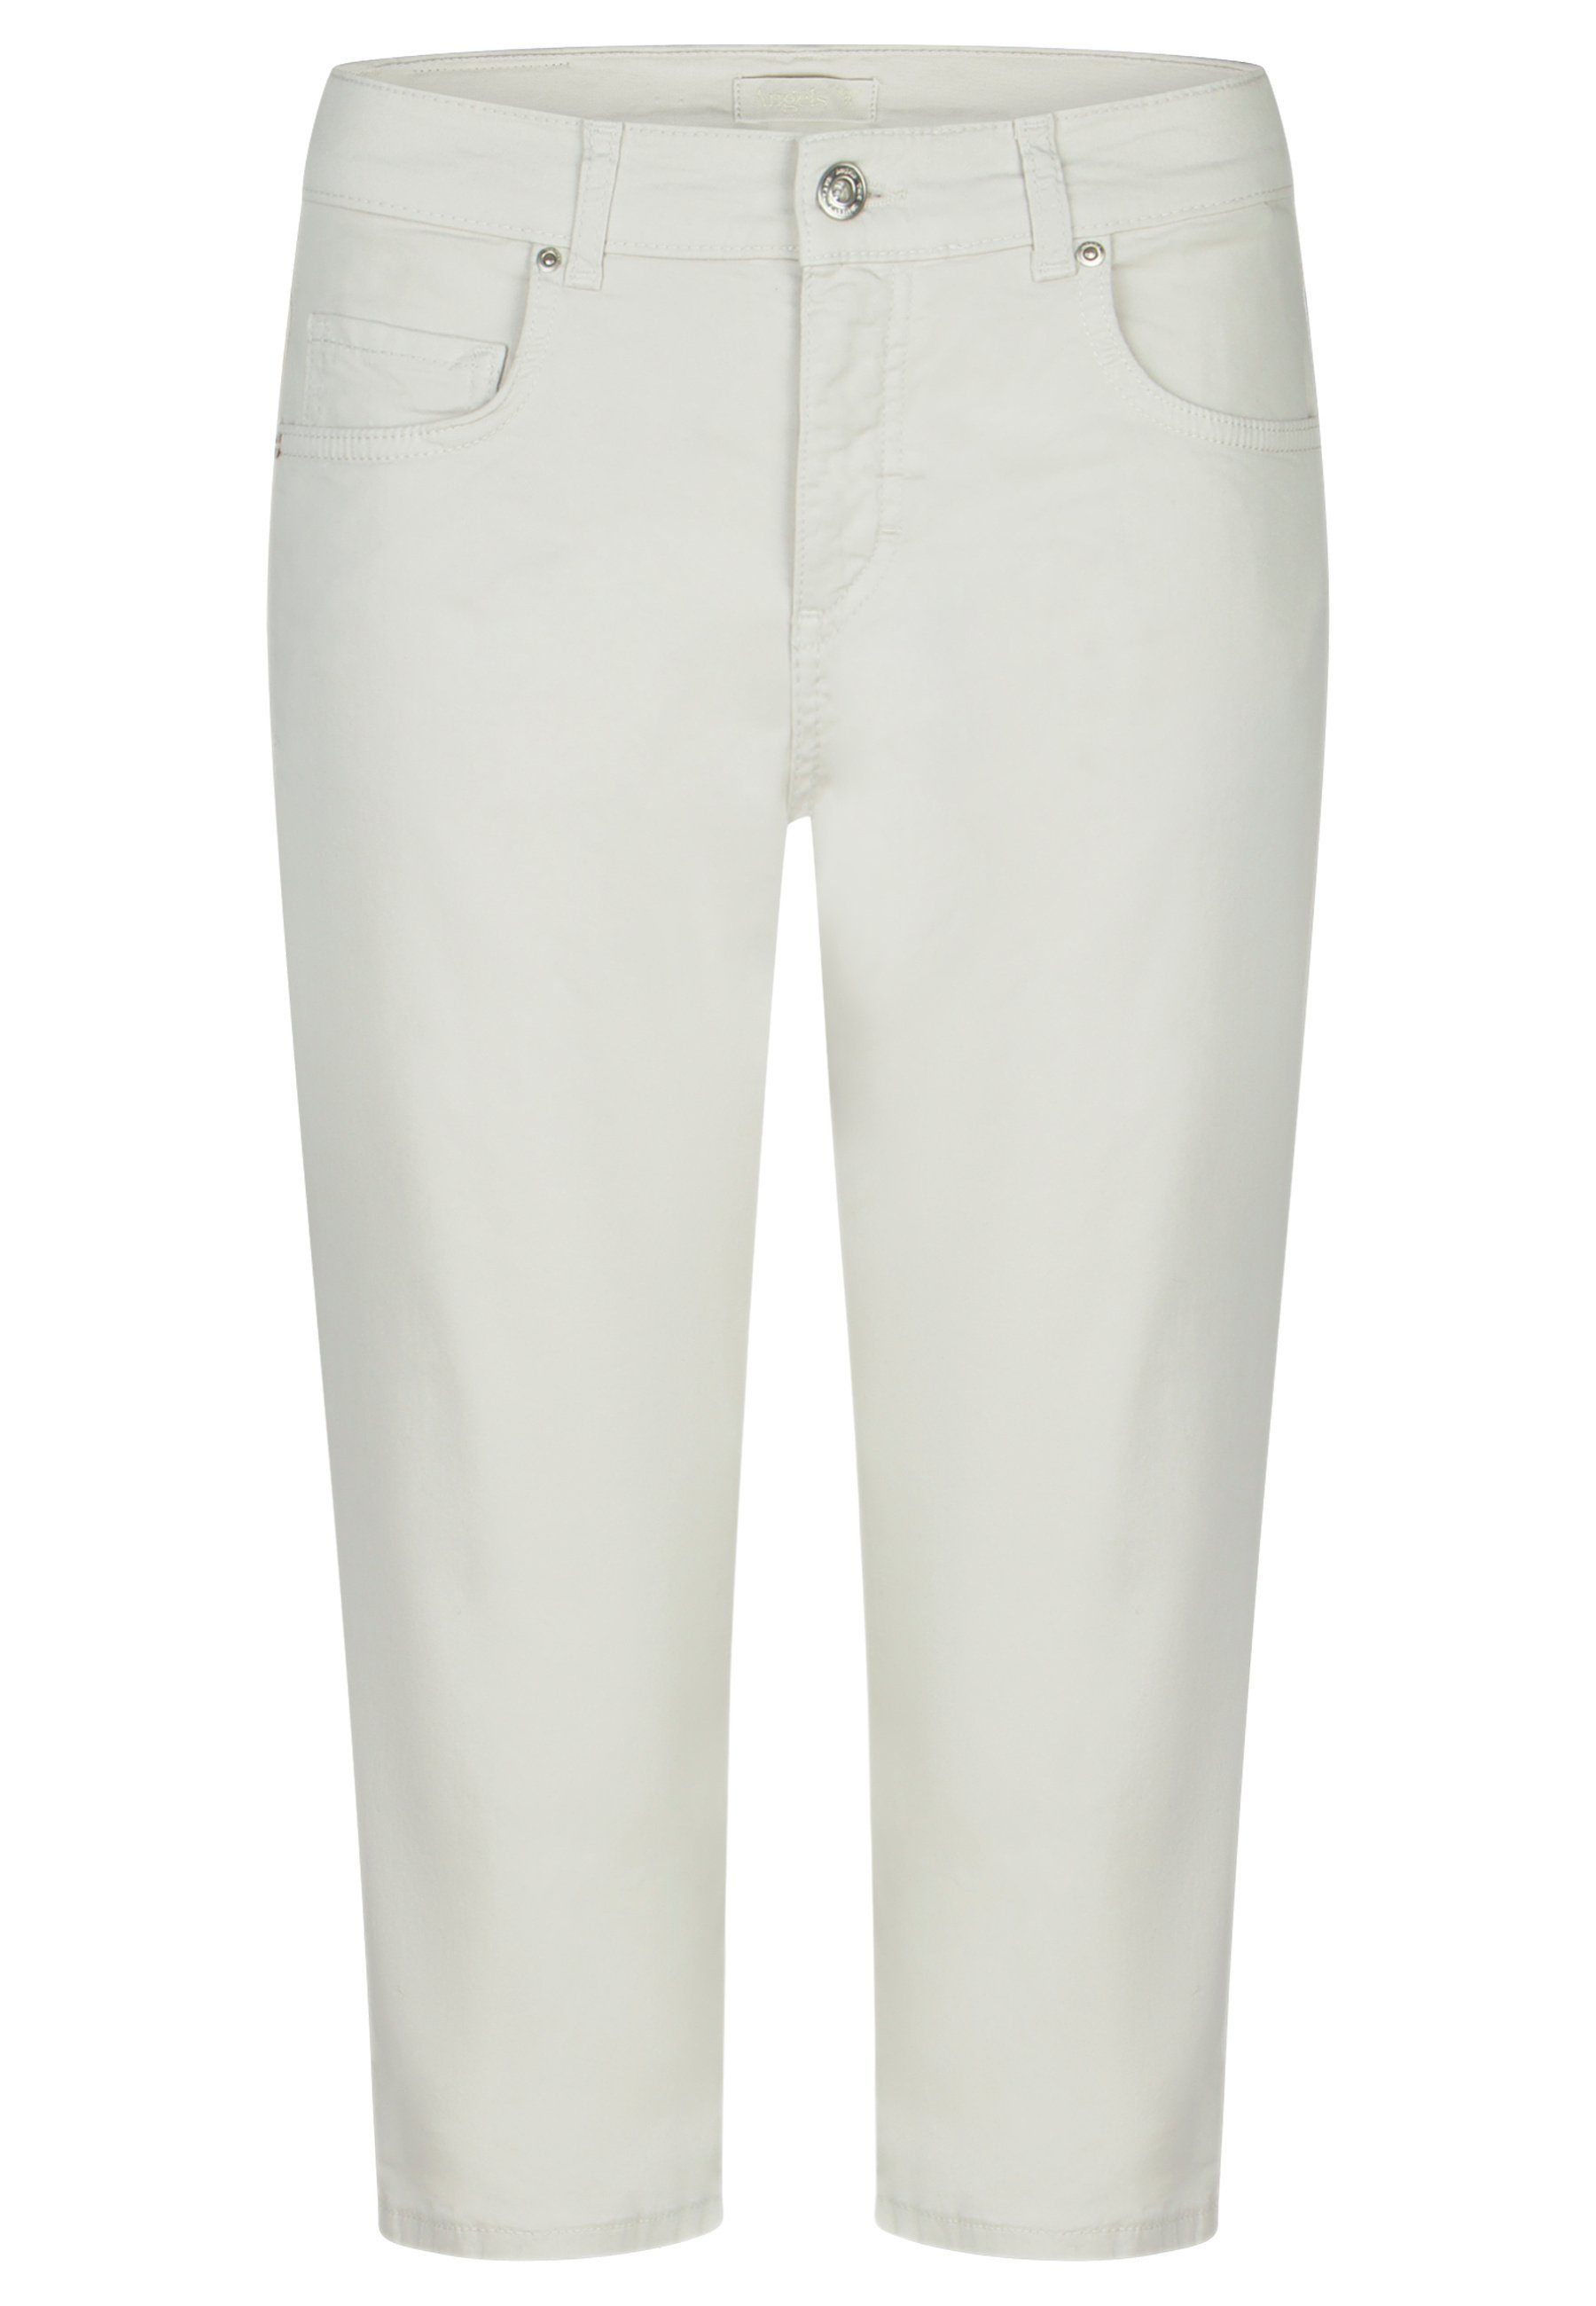 Label-Applikationen ANGELS Capri mit TU hellgrau Slim-fit-Jeans 5-Pocket-Hose